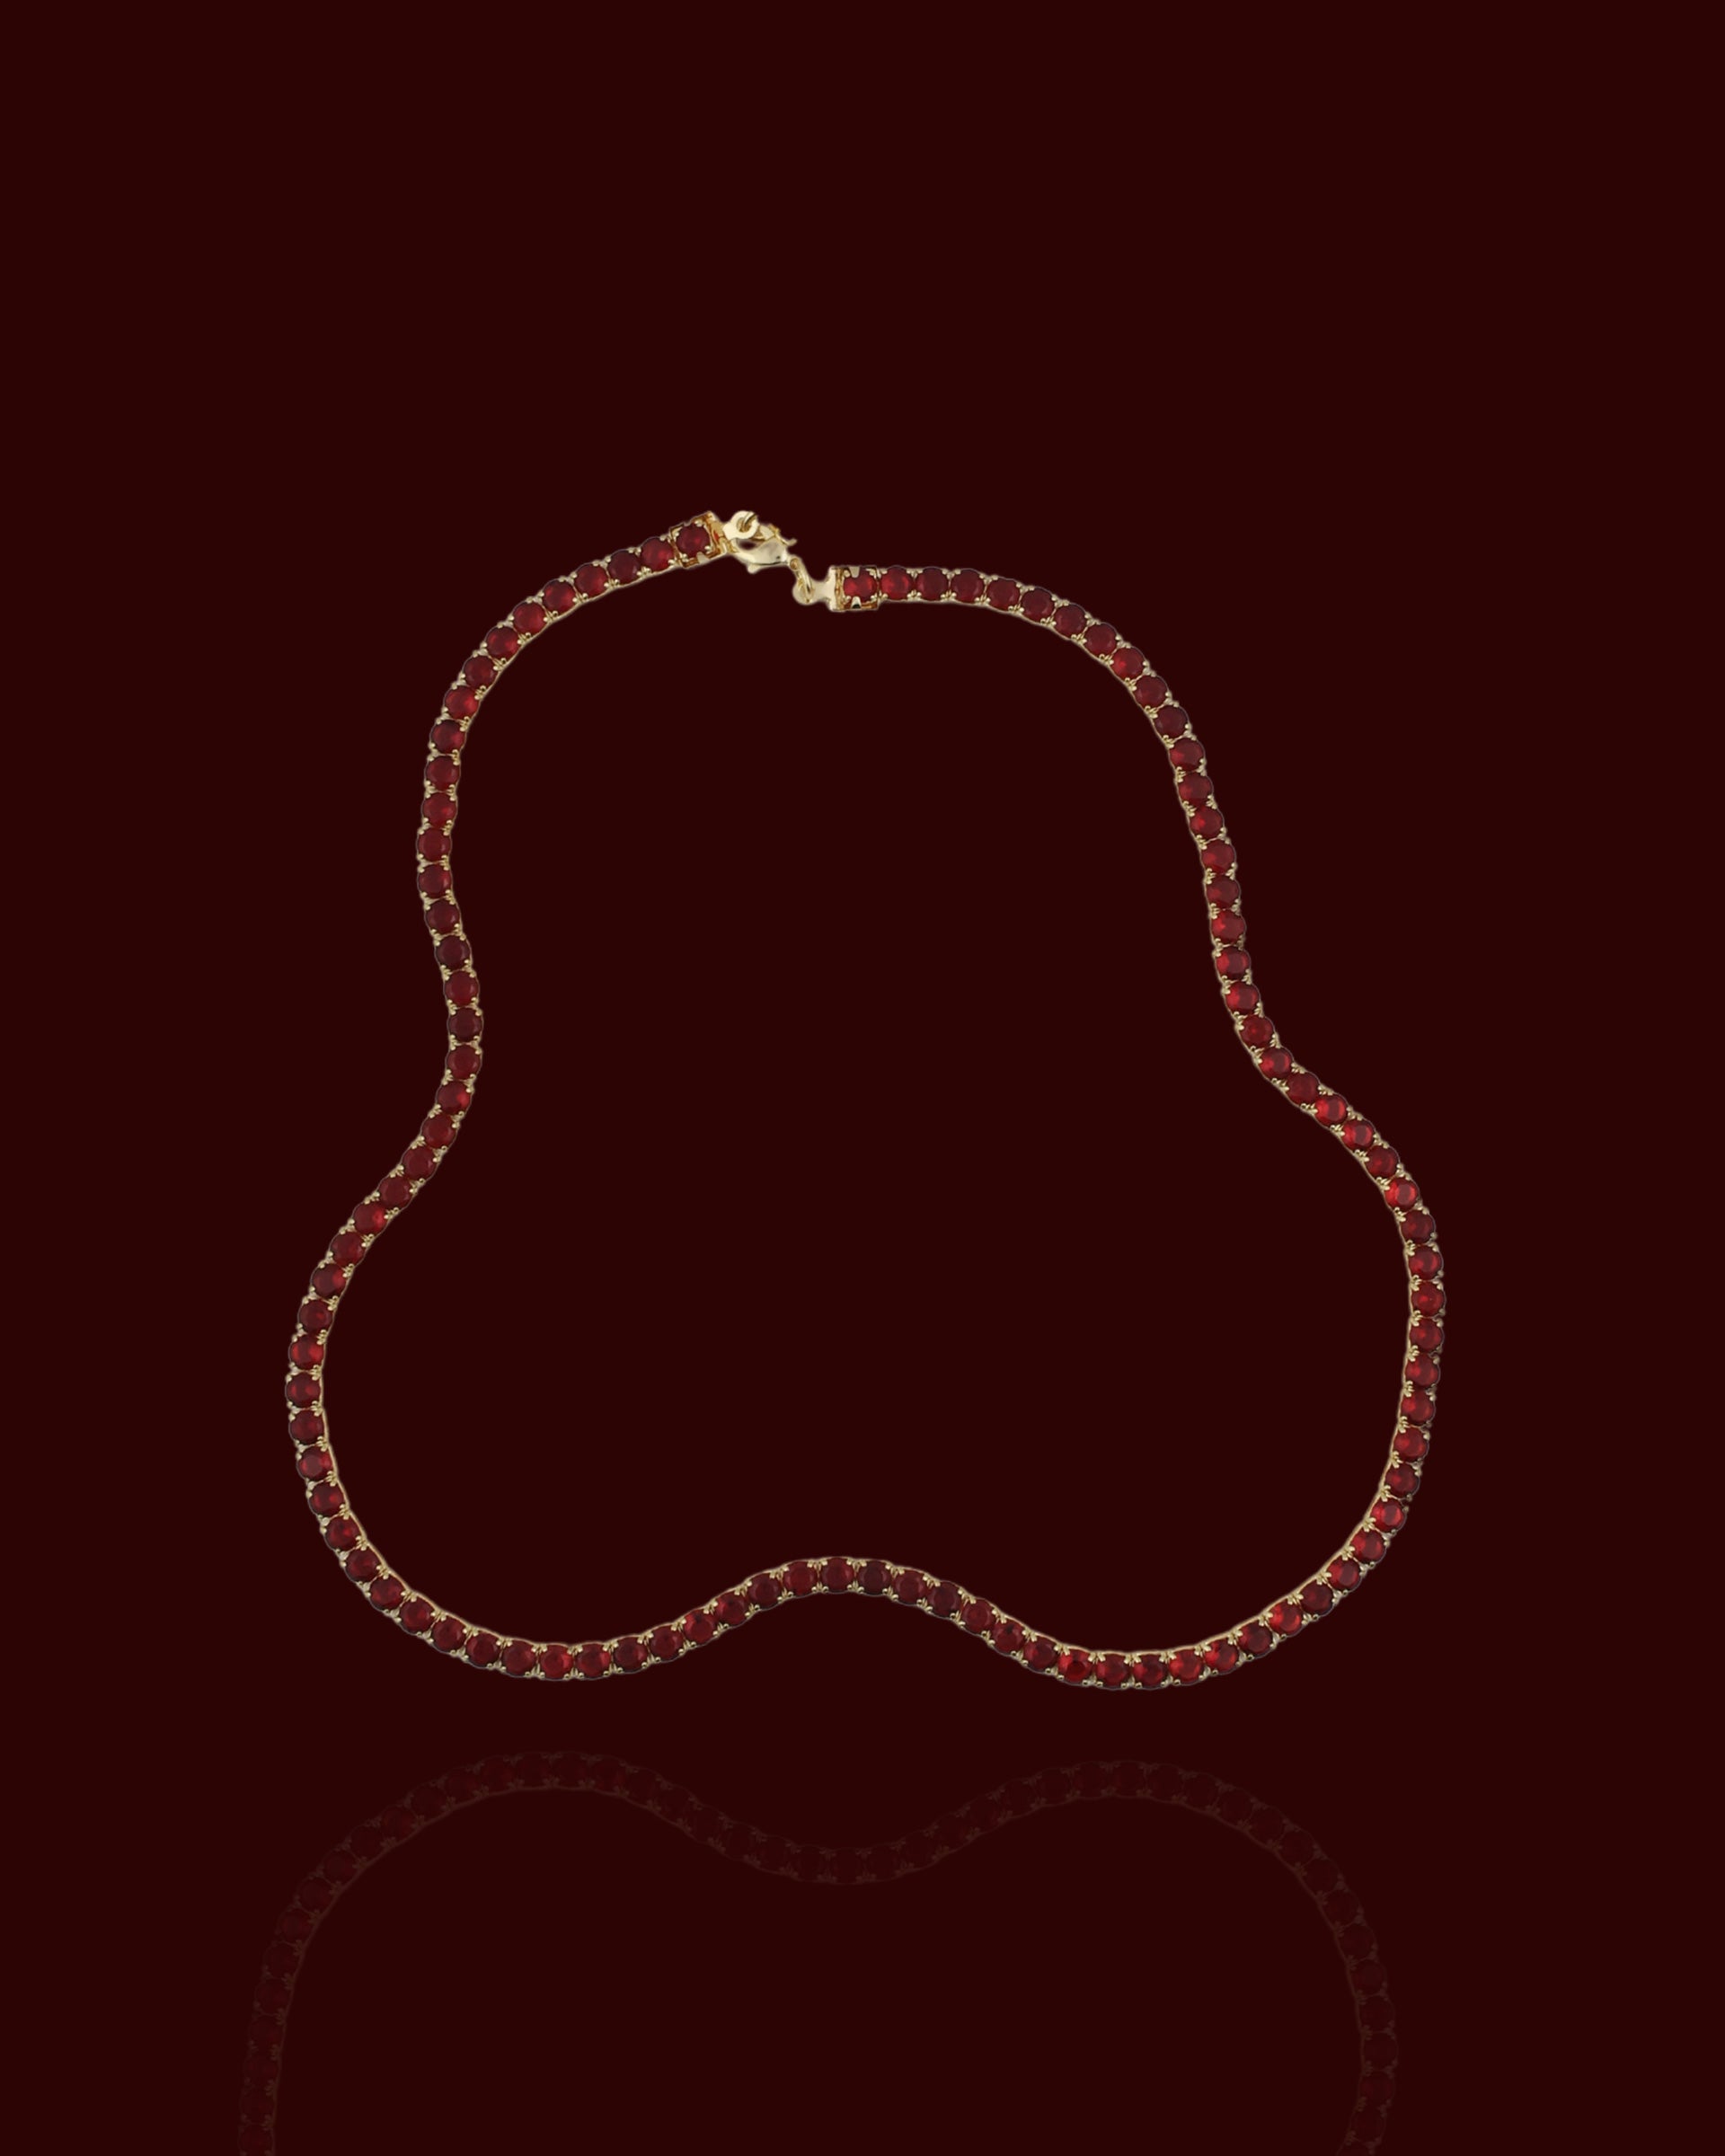 Scarlet Necklace